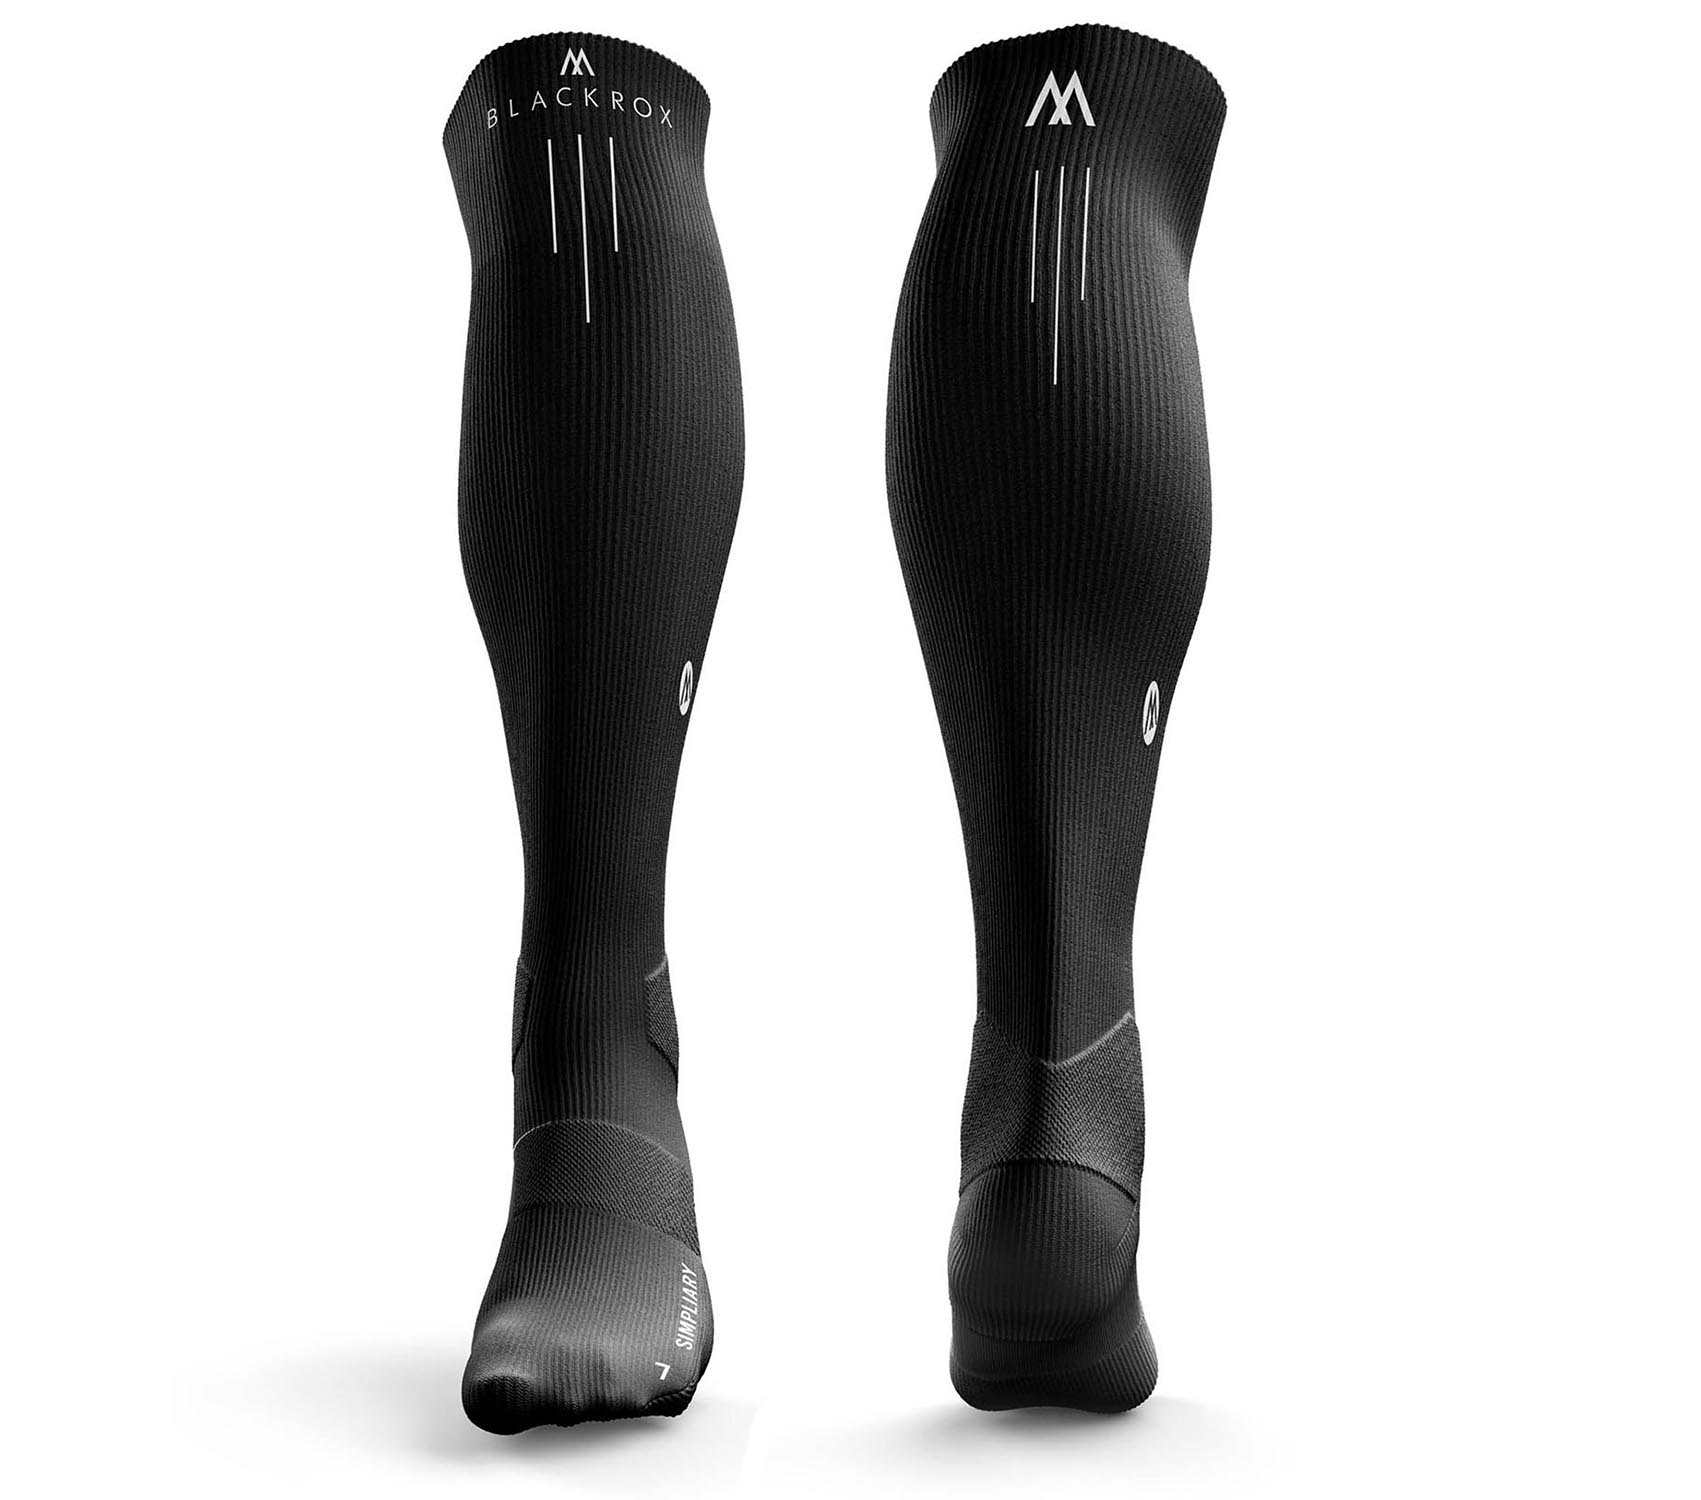 Kompressziós sportzokni BLACKROX “SIMPLIARY” kompressziós zokni